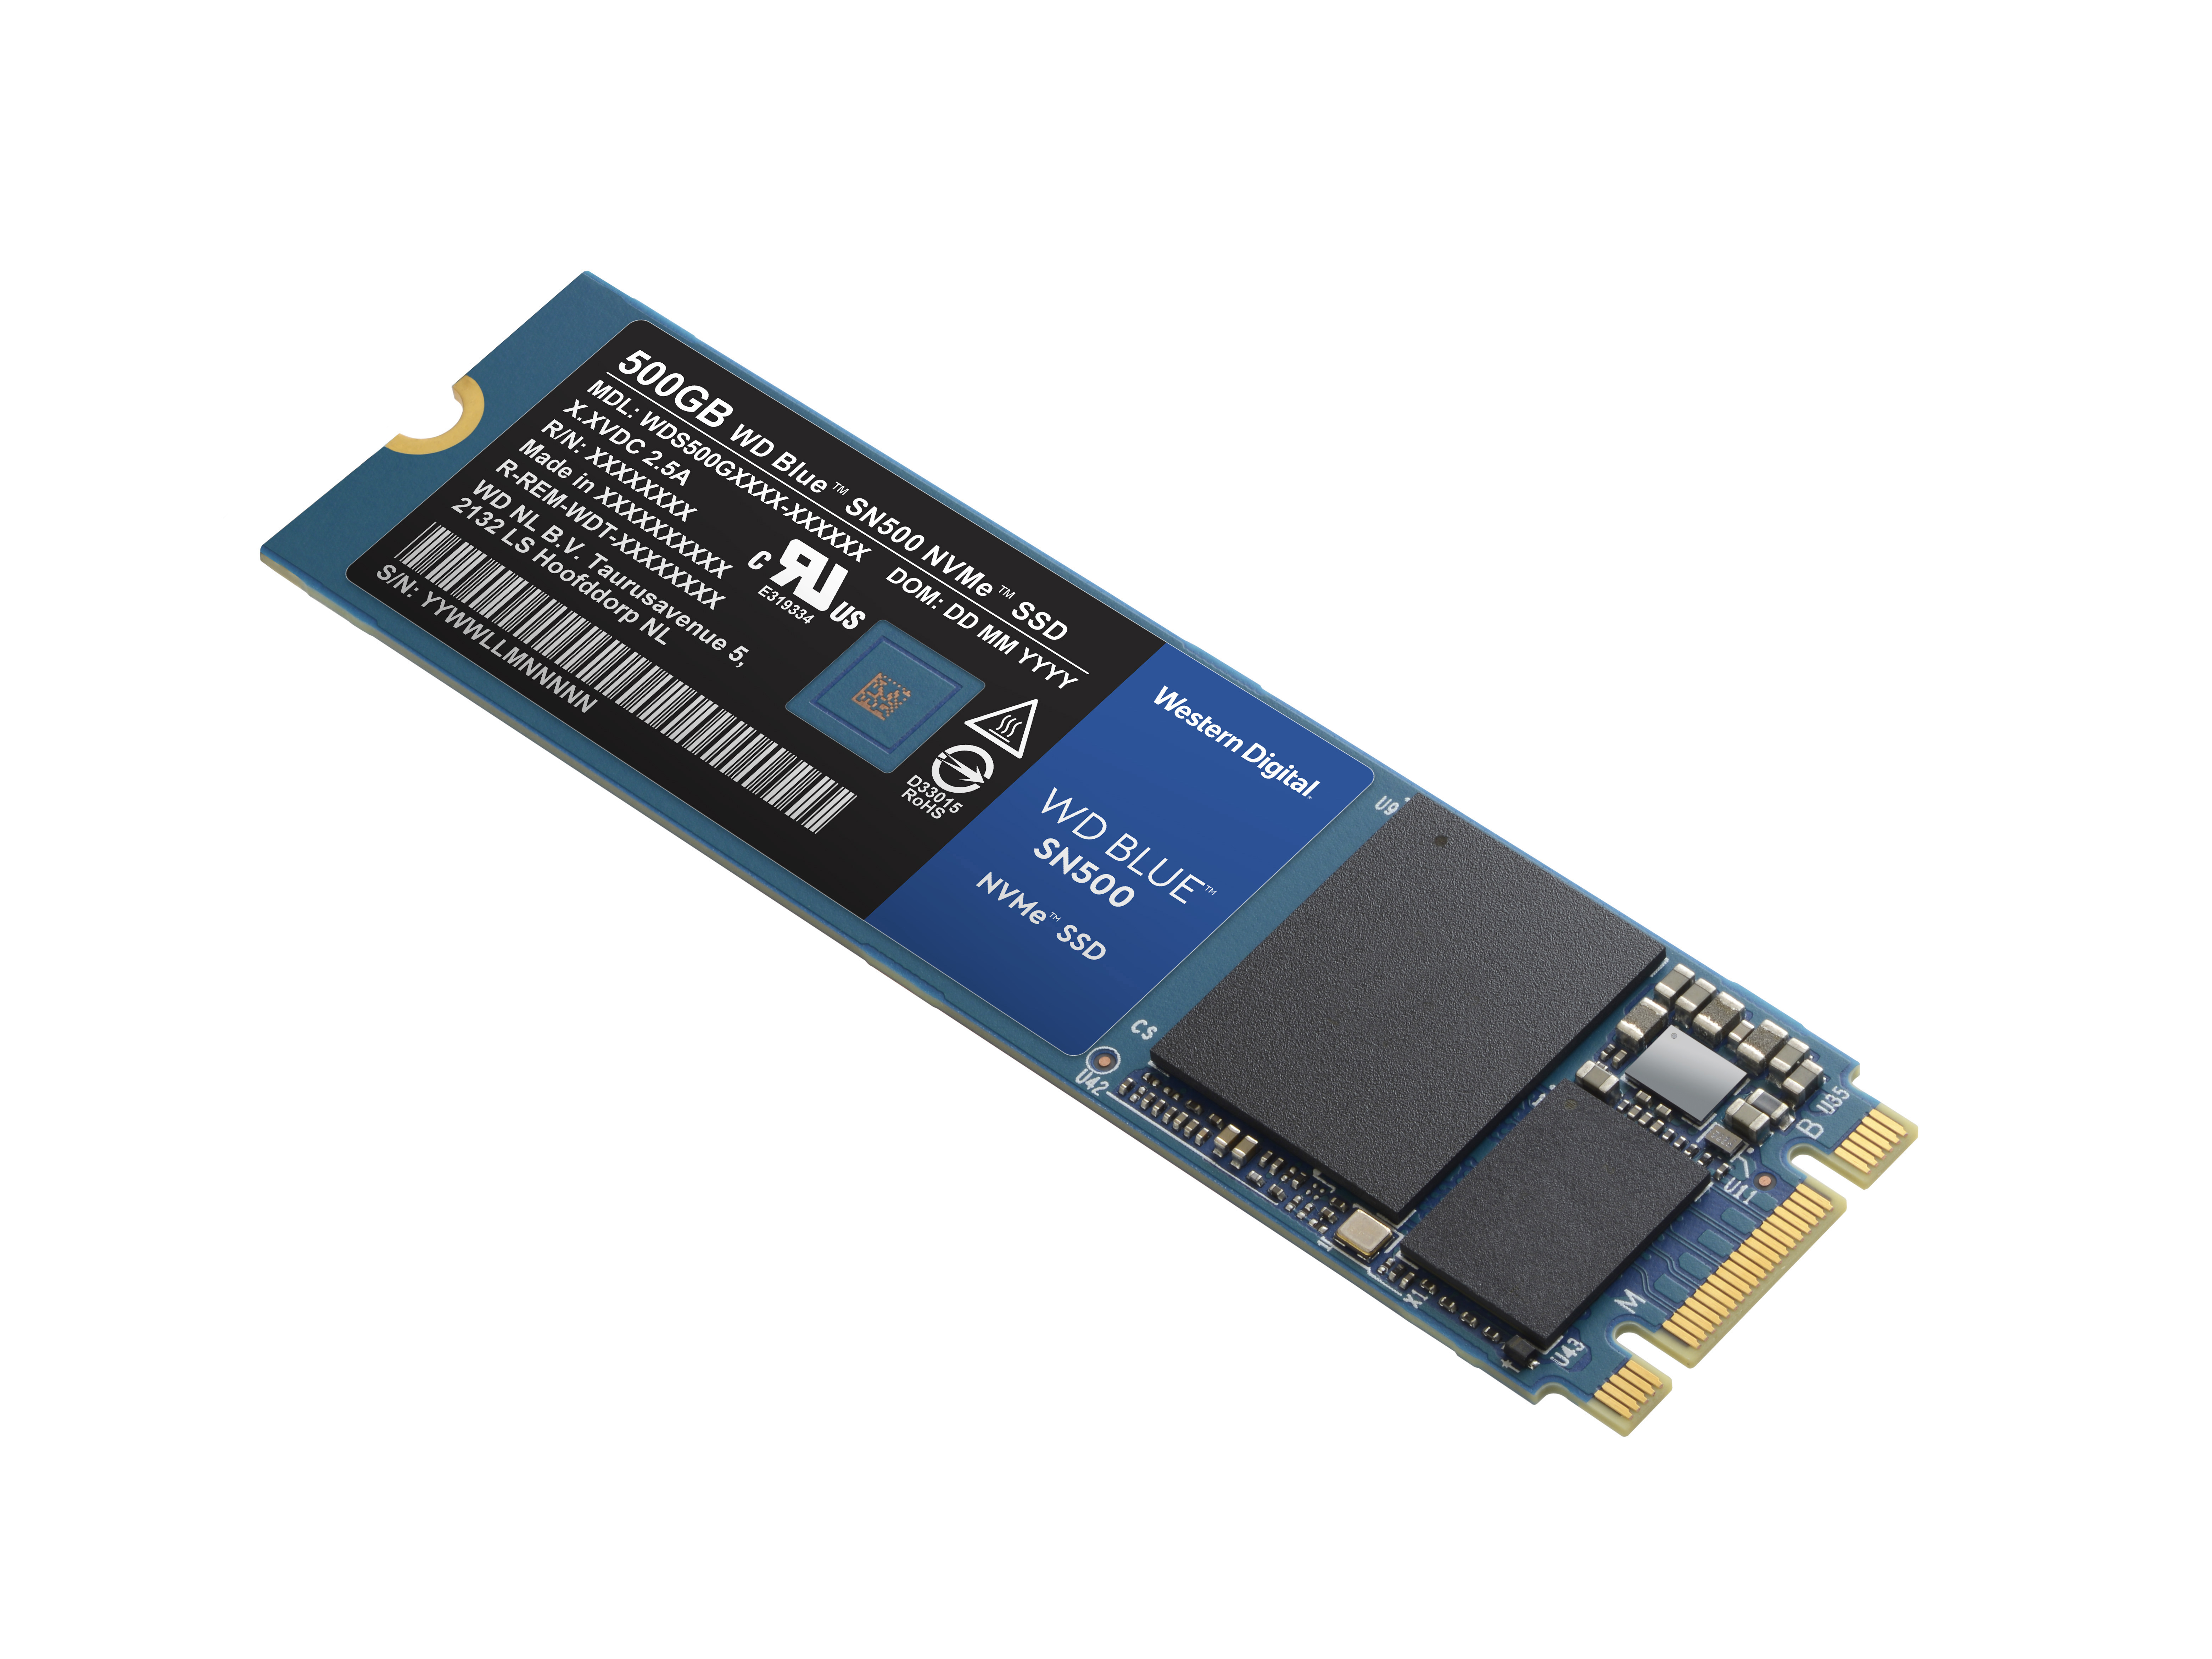 PCIe, intern GB 500 WD M.2 SSD Blue™ NVMe™ via Festplatte, SN500